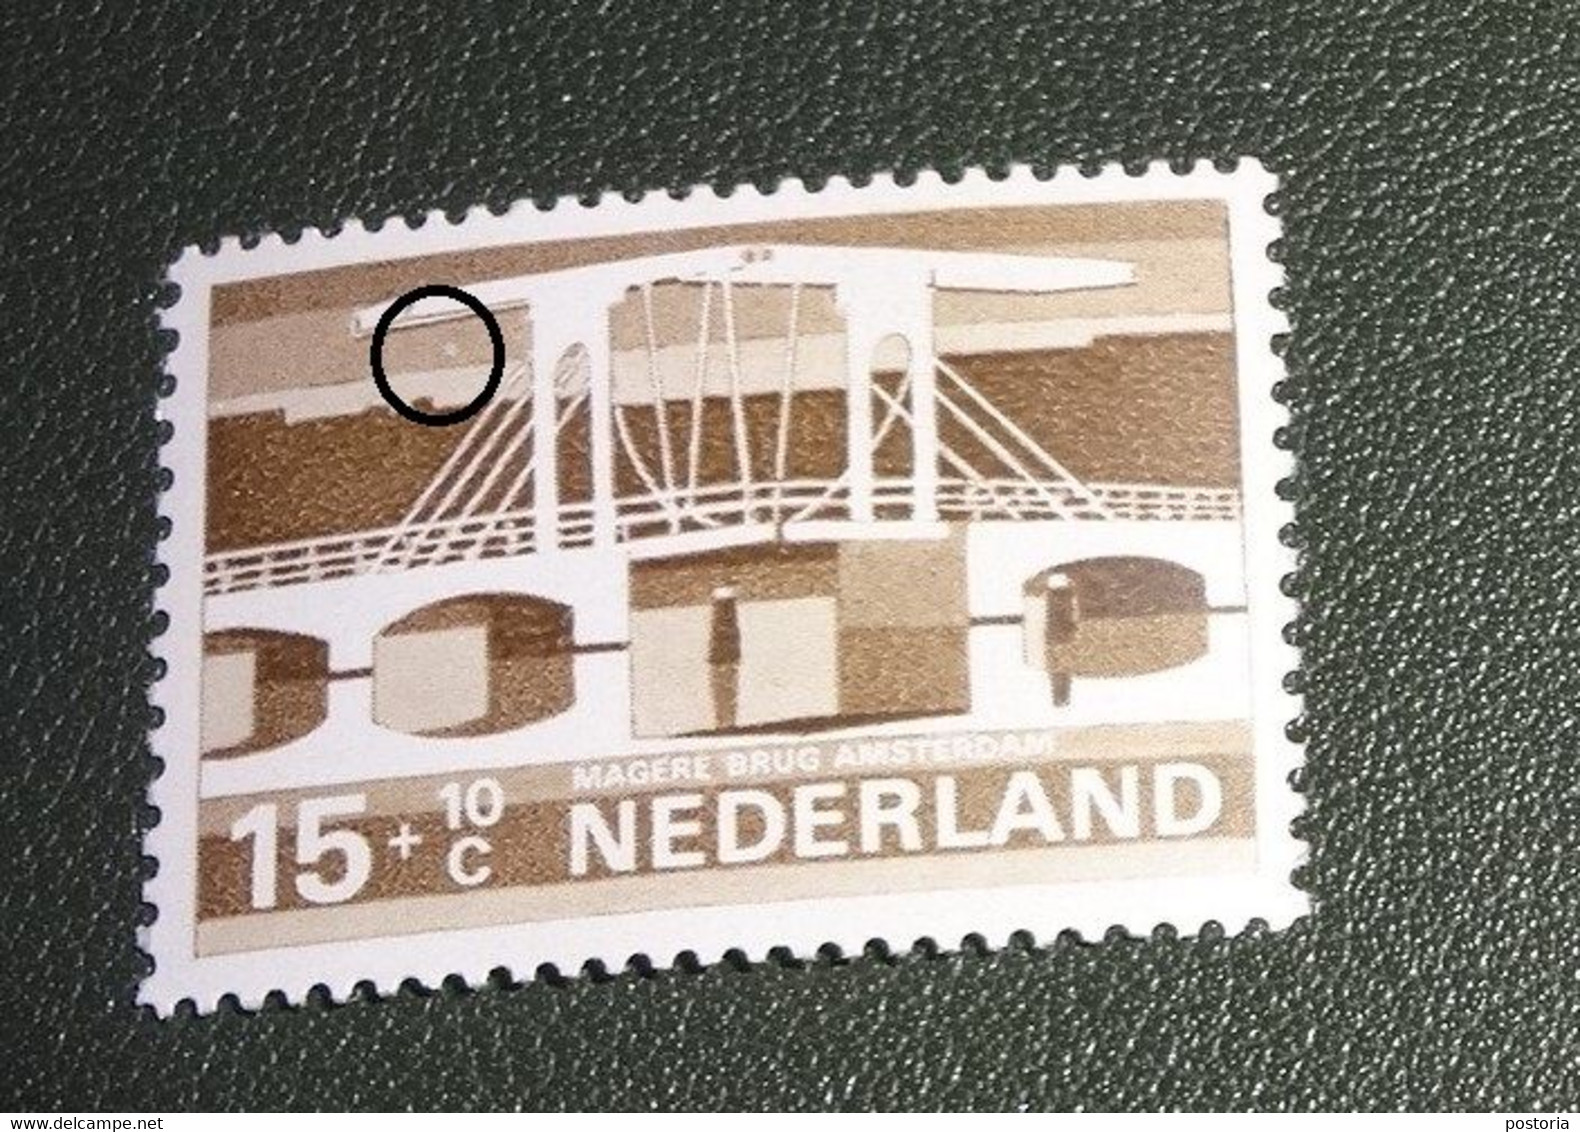 Nederland - MAST - 902 PM - 1968 - Plaatfout - Postfris - Wit Vlekje Onder Ophaalgewicht - Variétés Et Curiosités